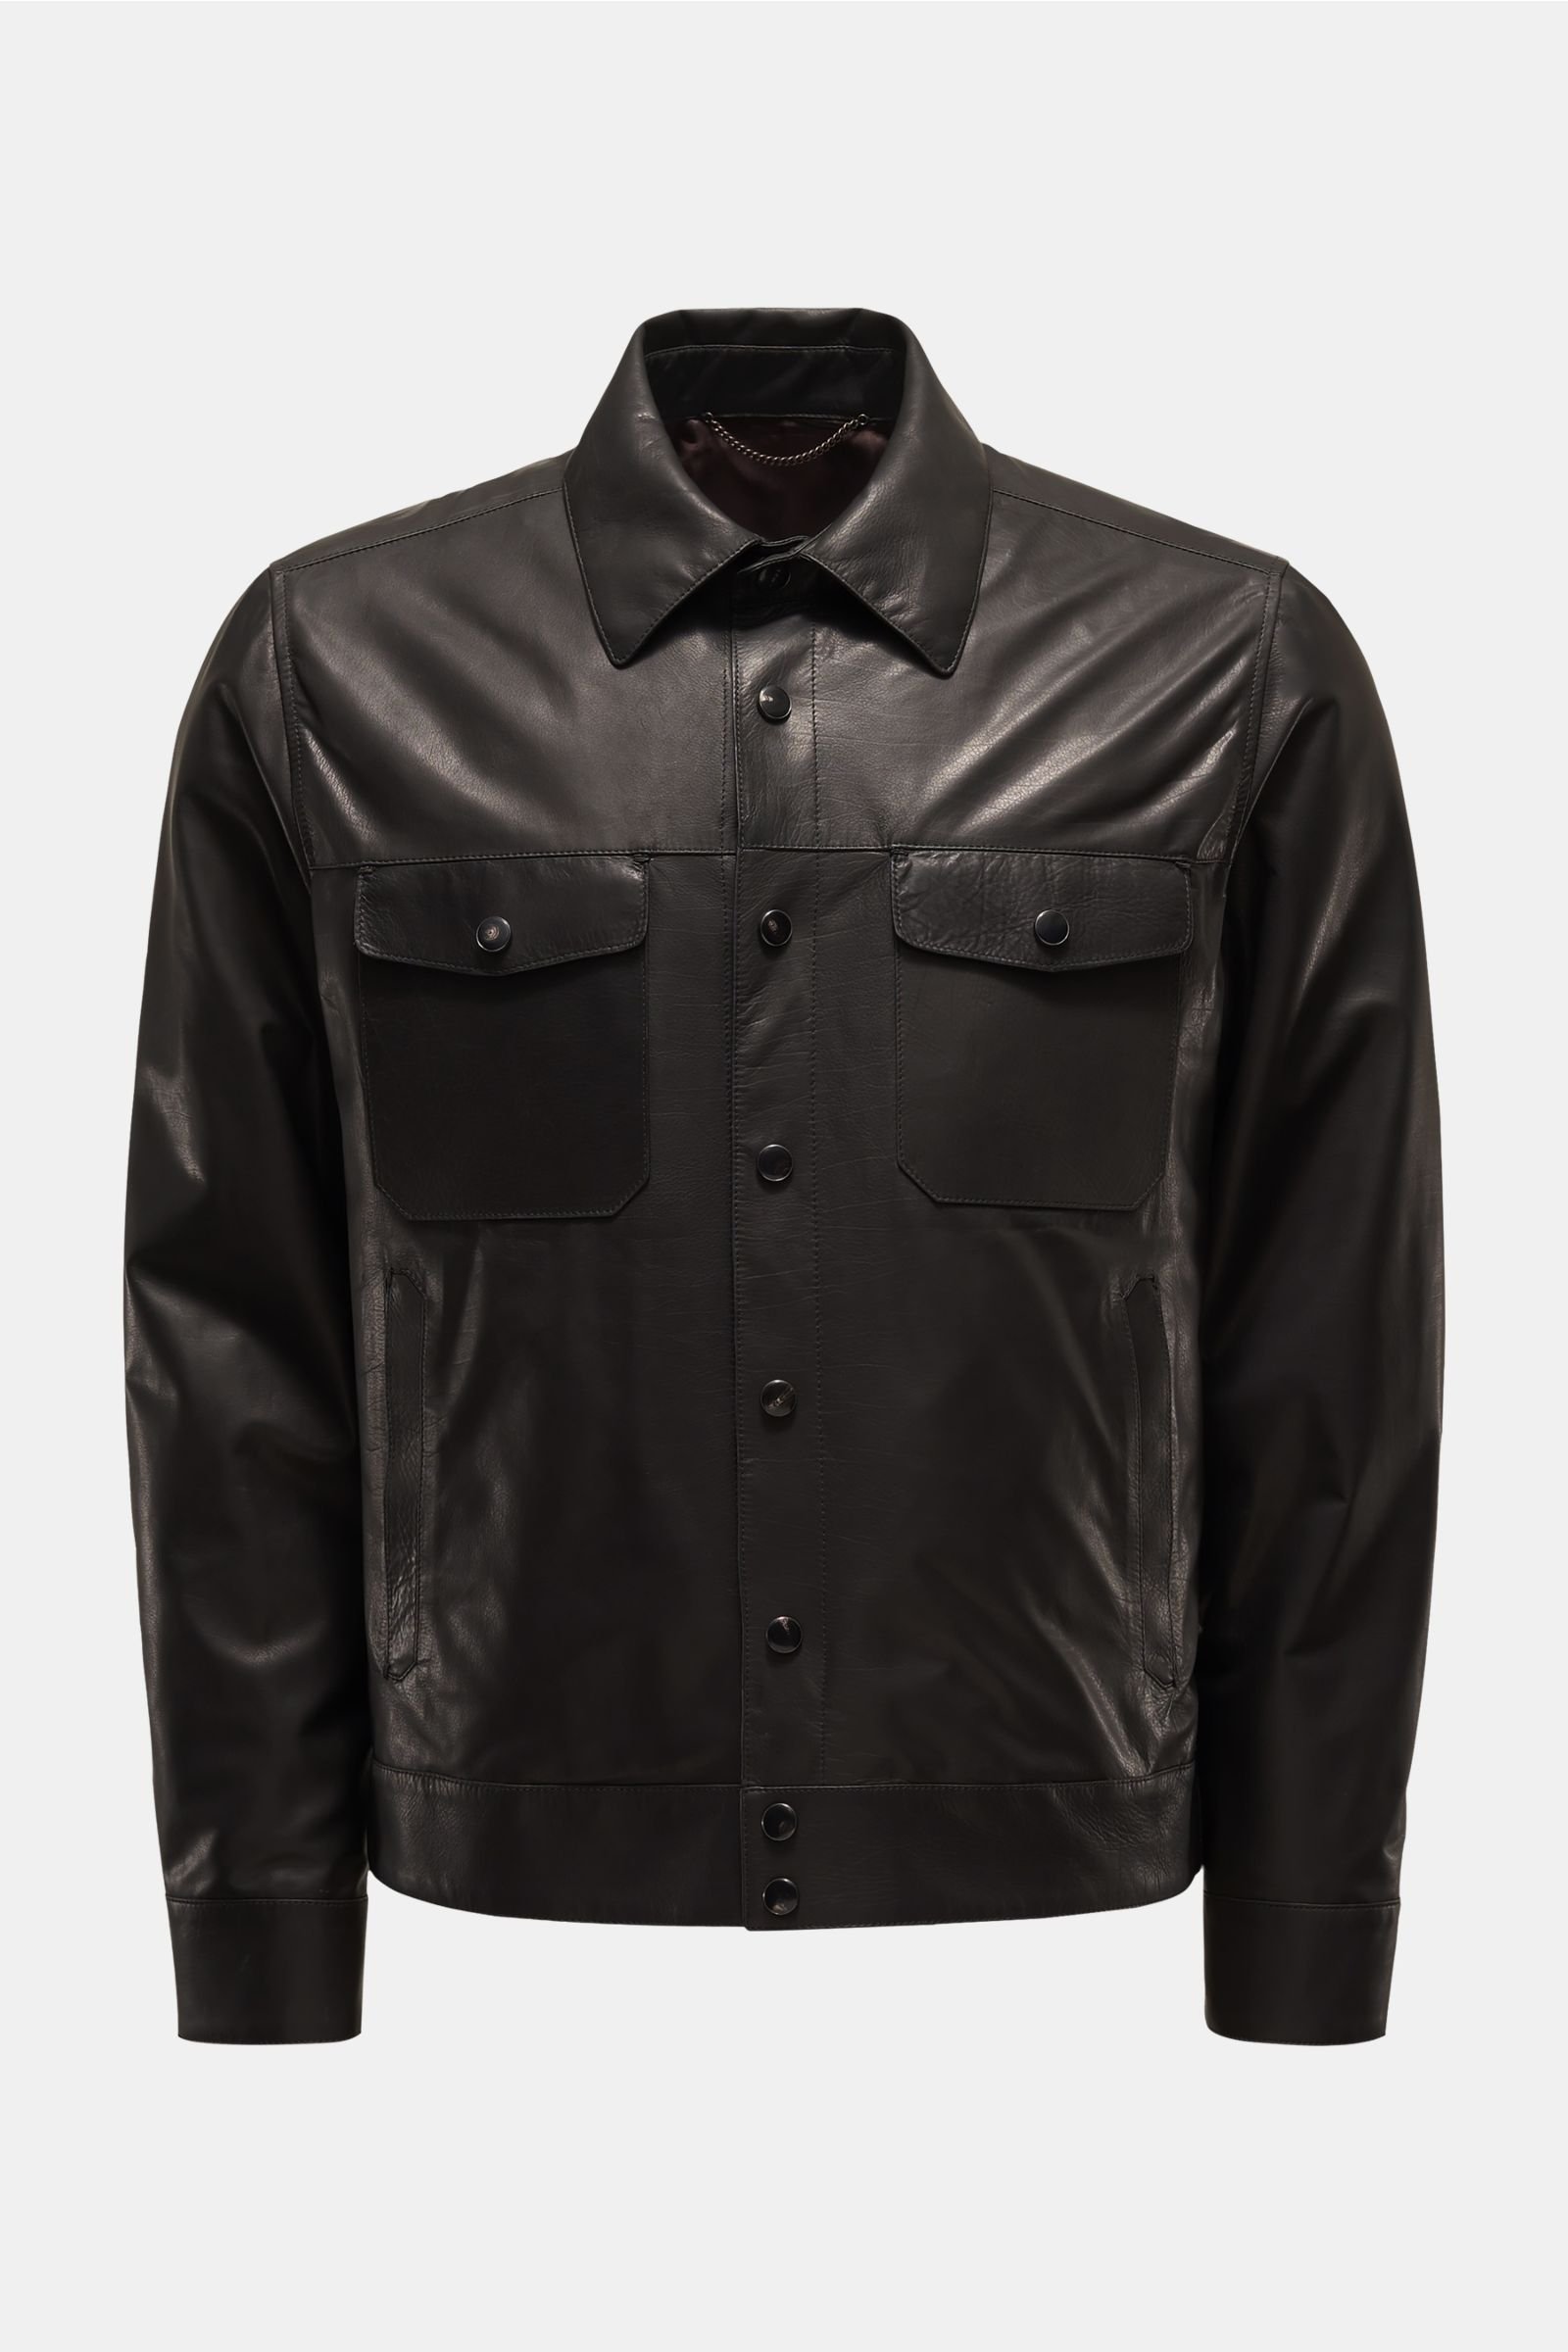 AJMONE leather jacket dark brown | BRAUN Hamburg